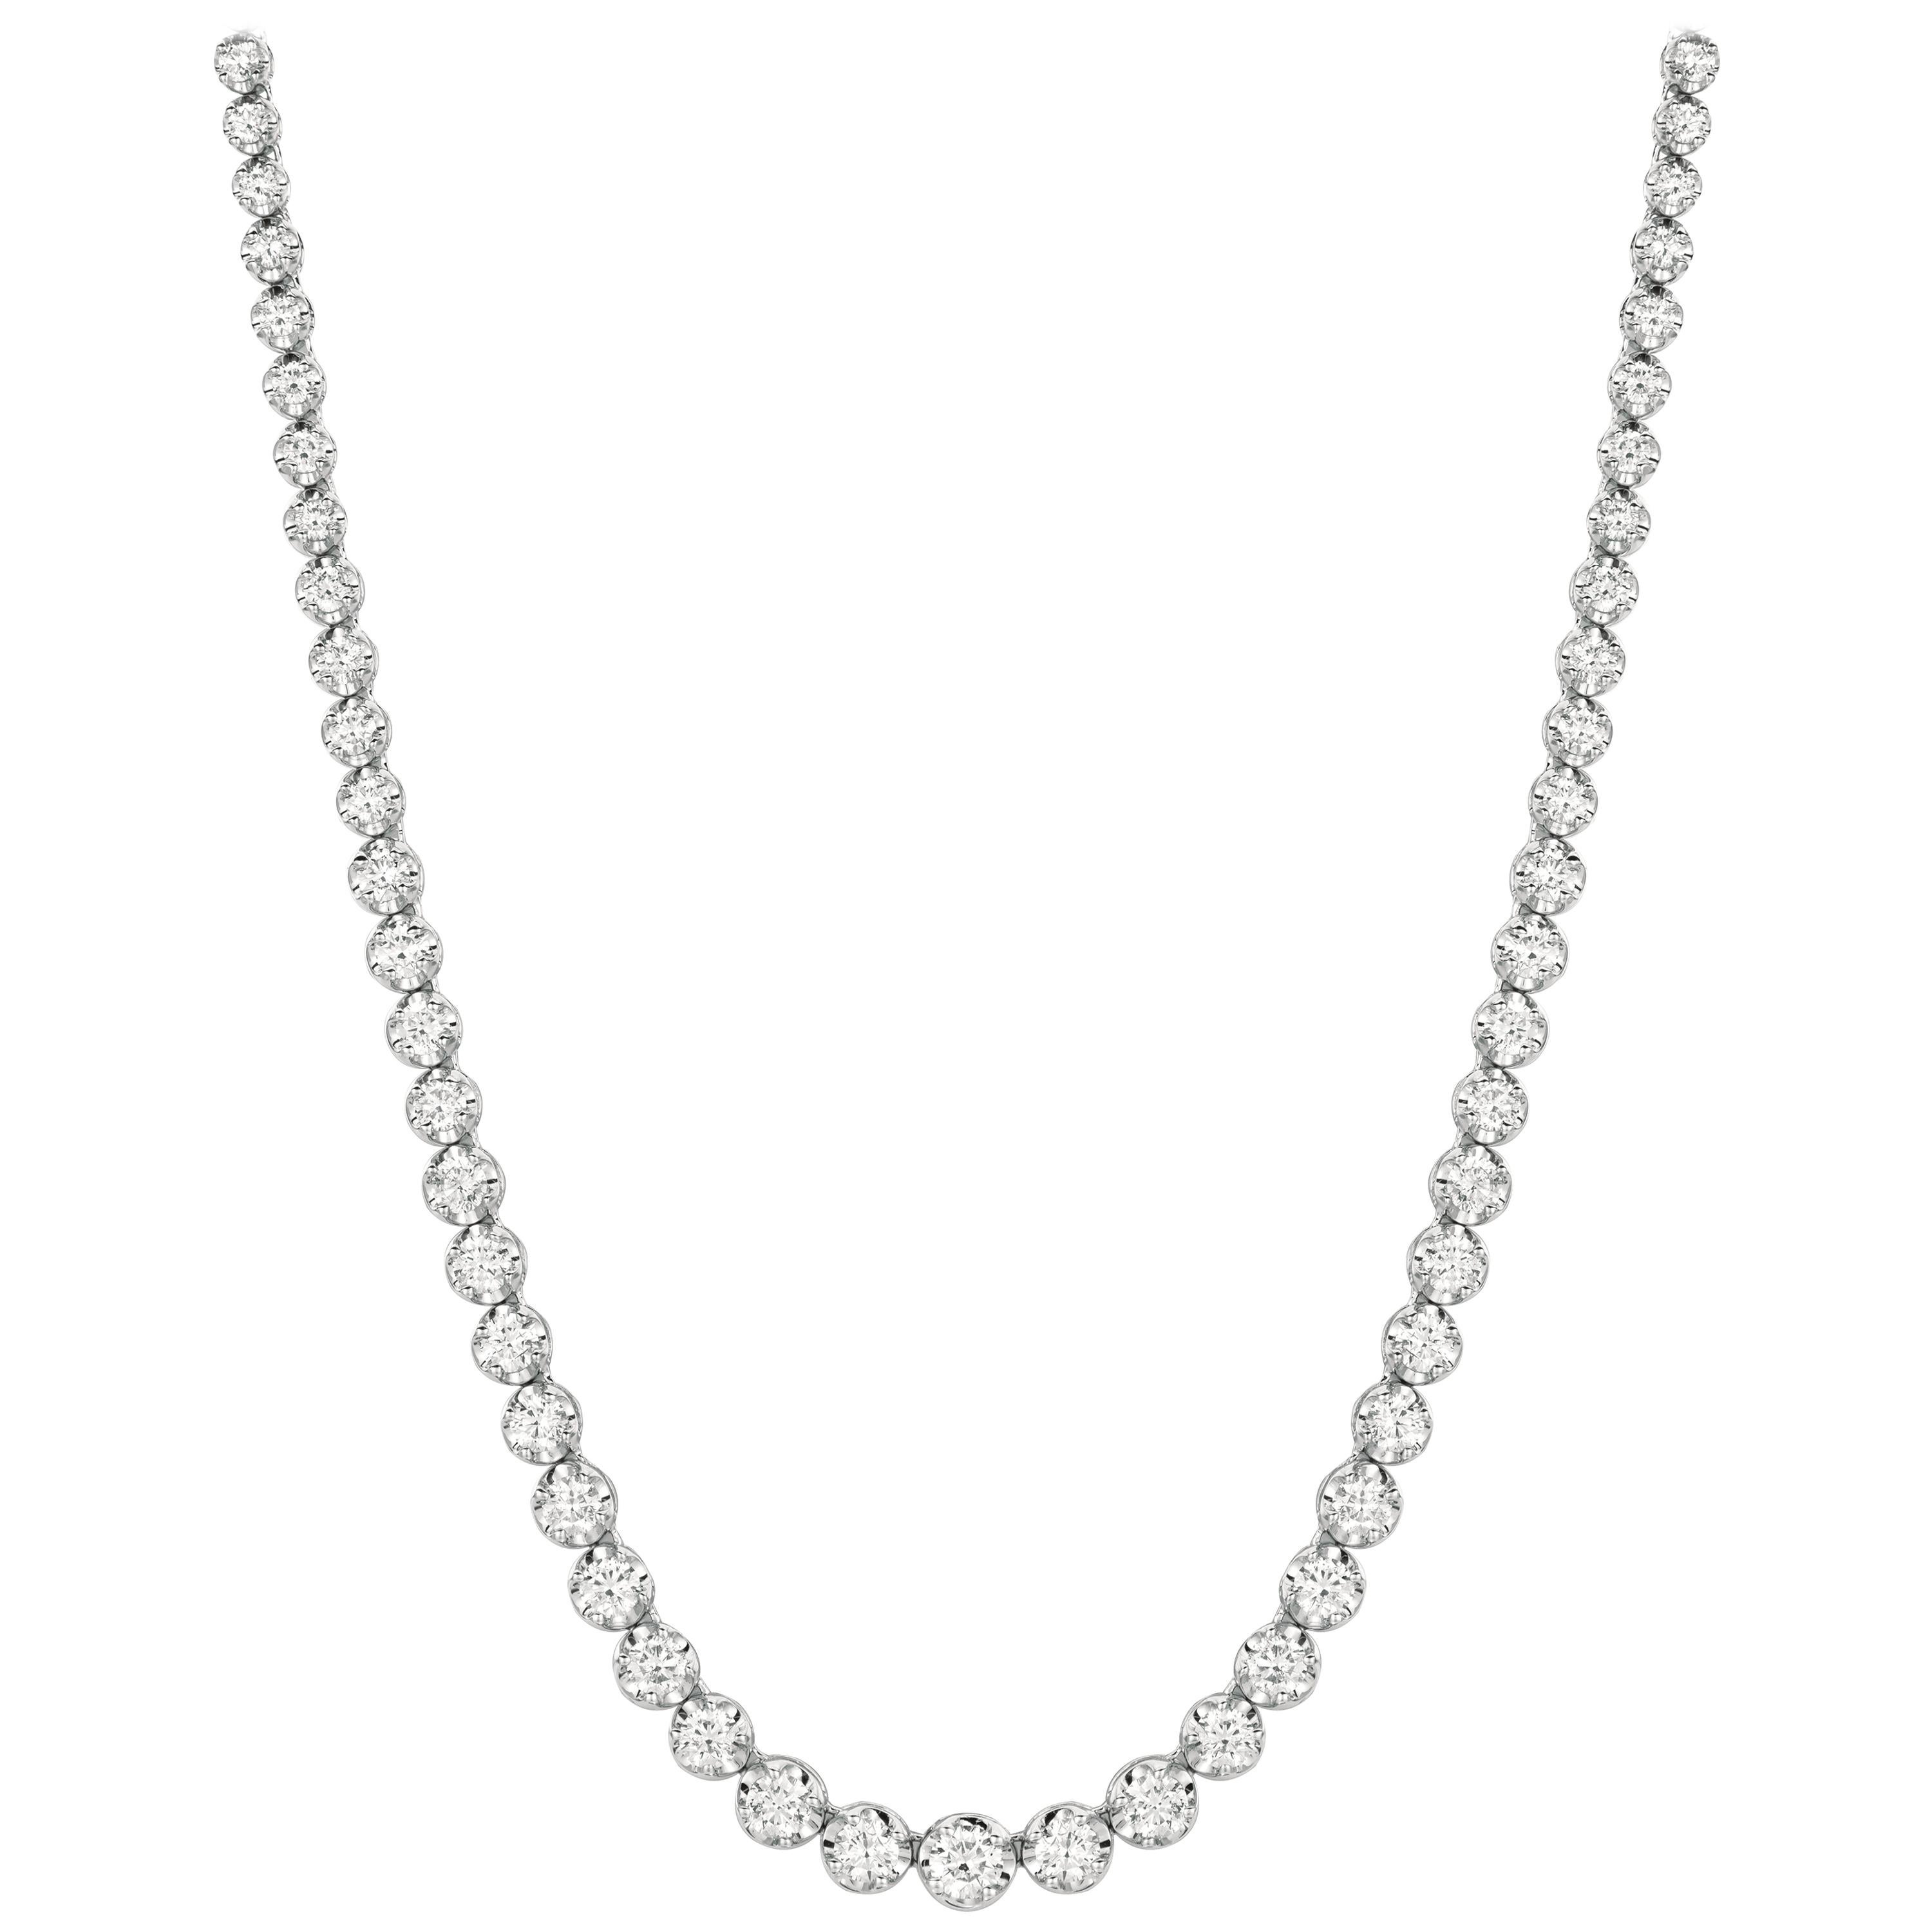 10.40 Carat Natural Diamond Tennis Necklace G SI 14 Karat White Gold